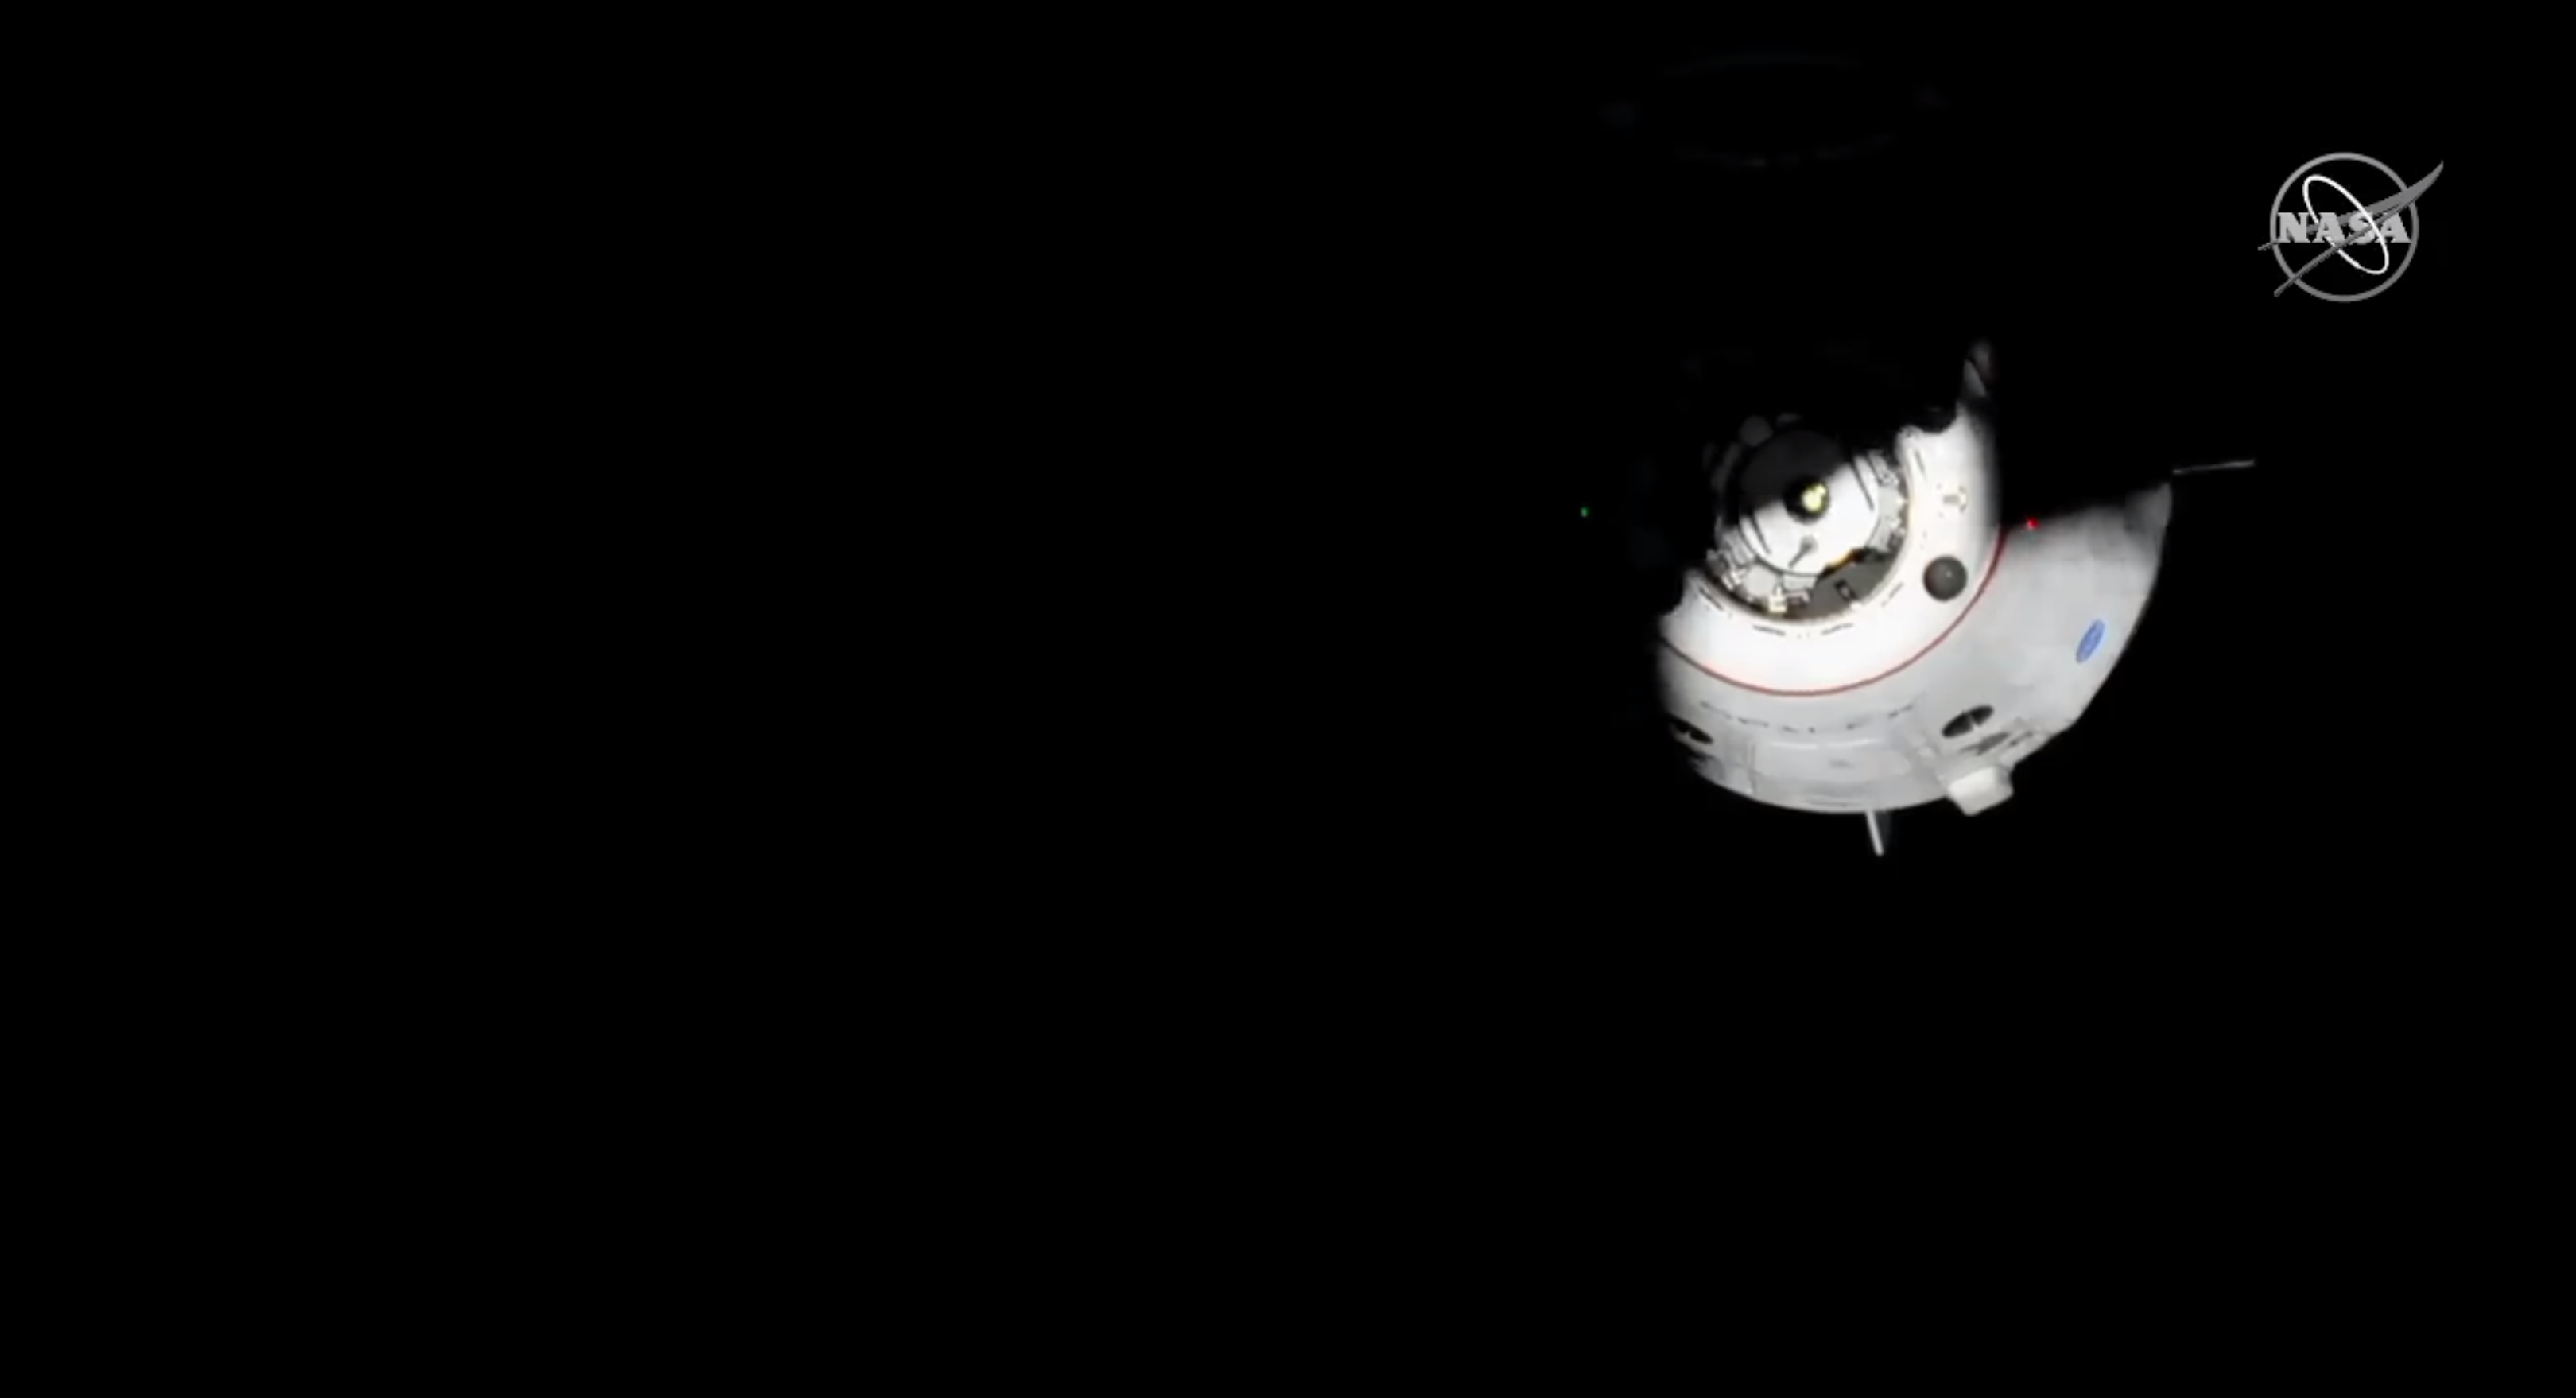 Crew Dragon DM-1 ISS arrival 030319 (NASA) 6